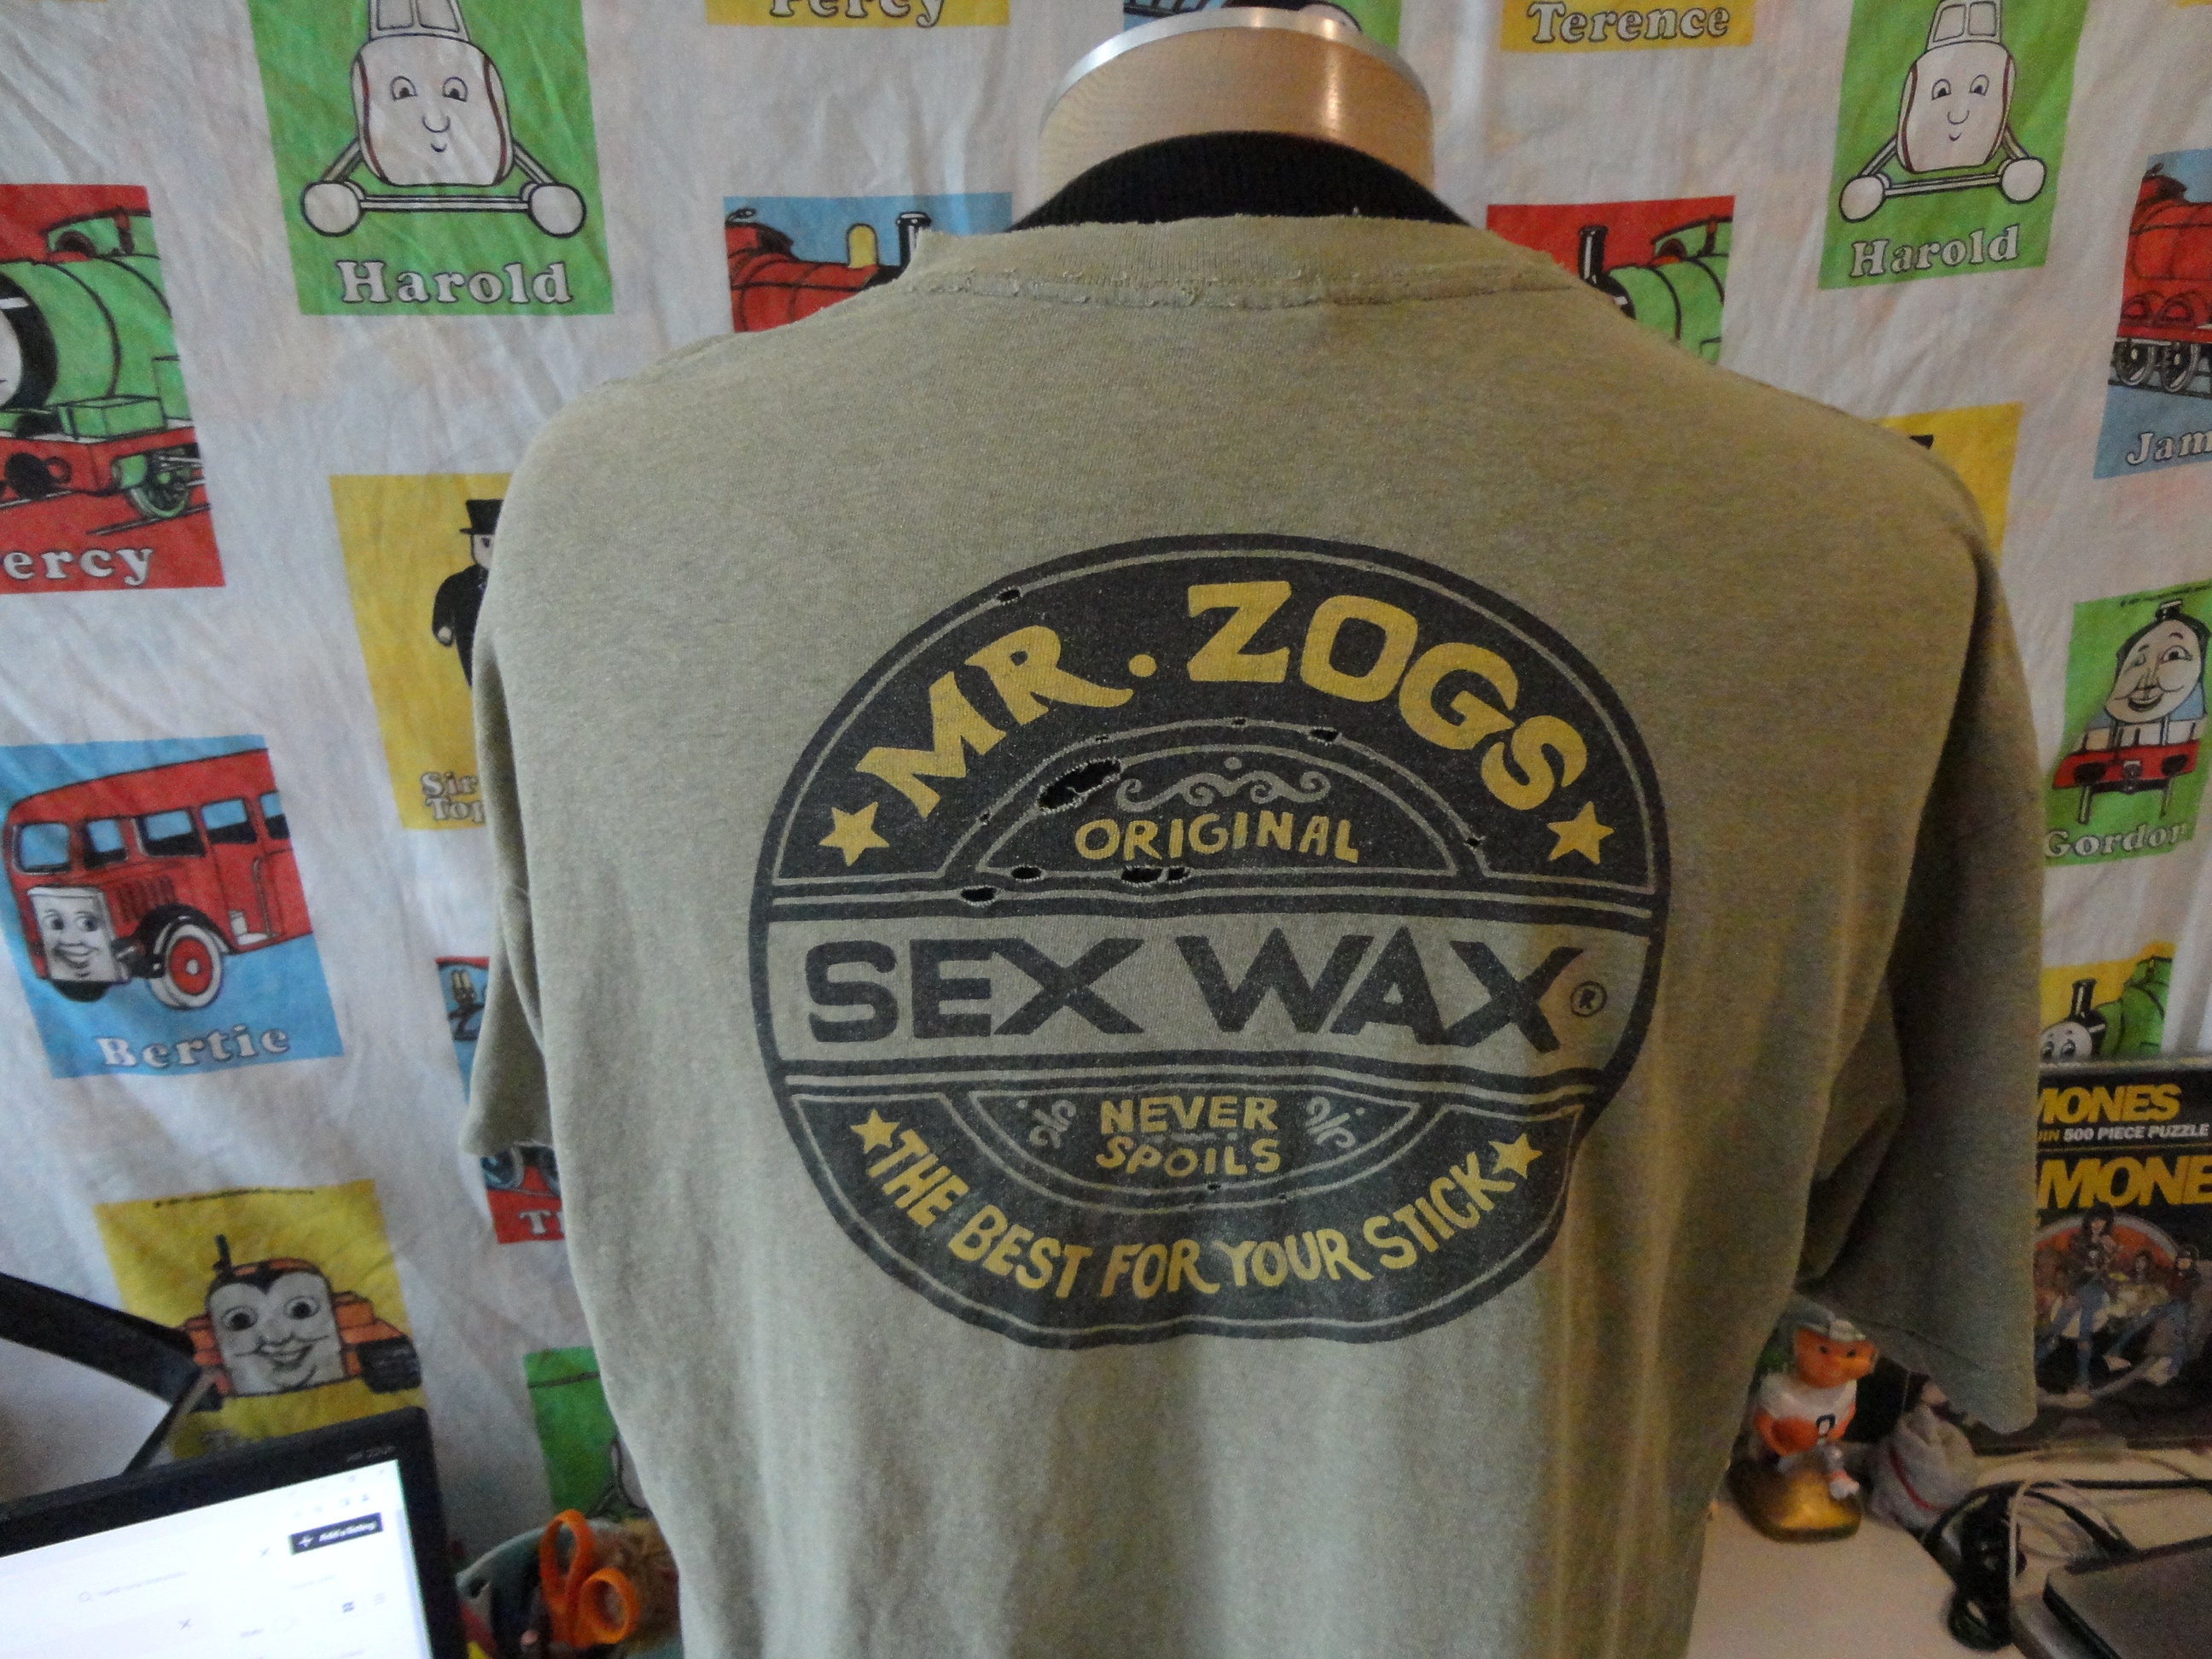 Sexwax Counter Display